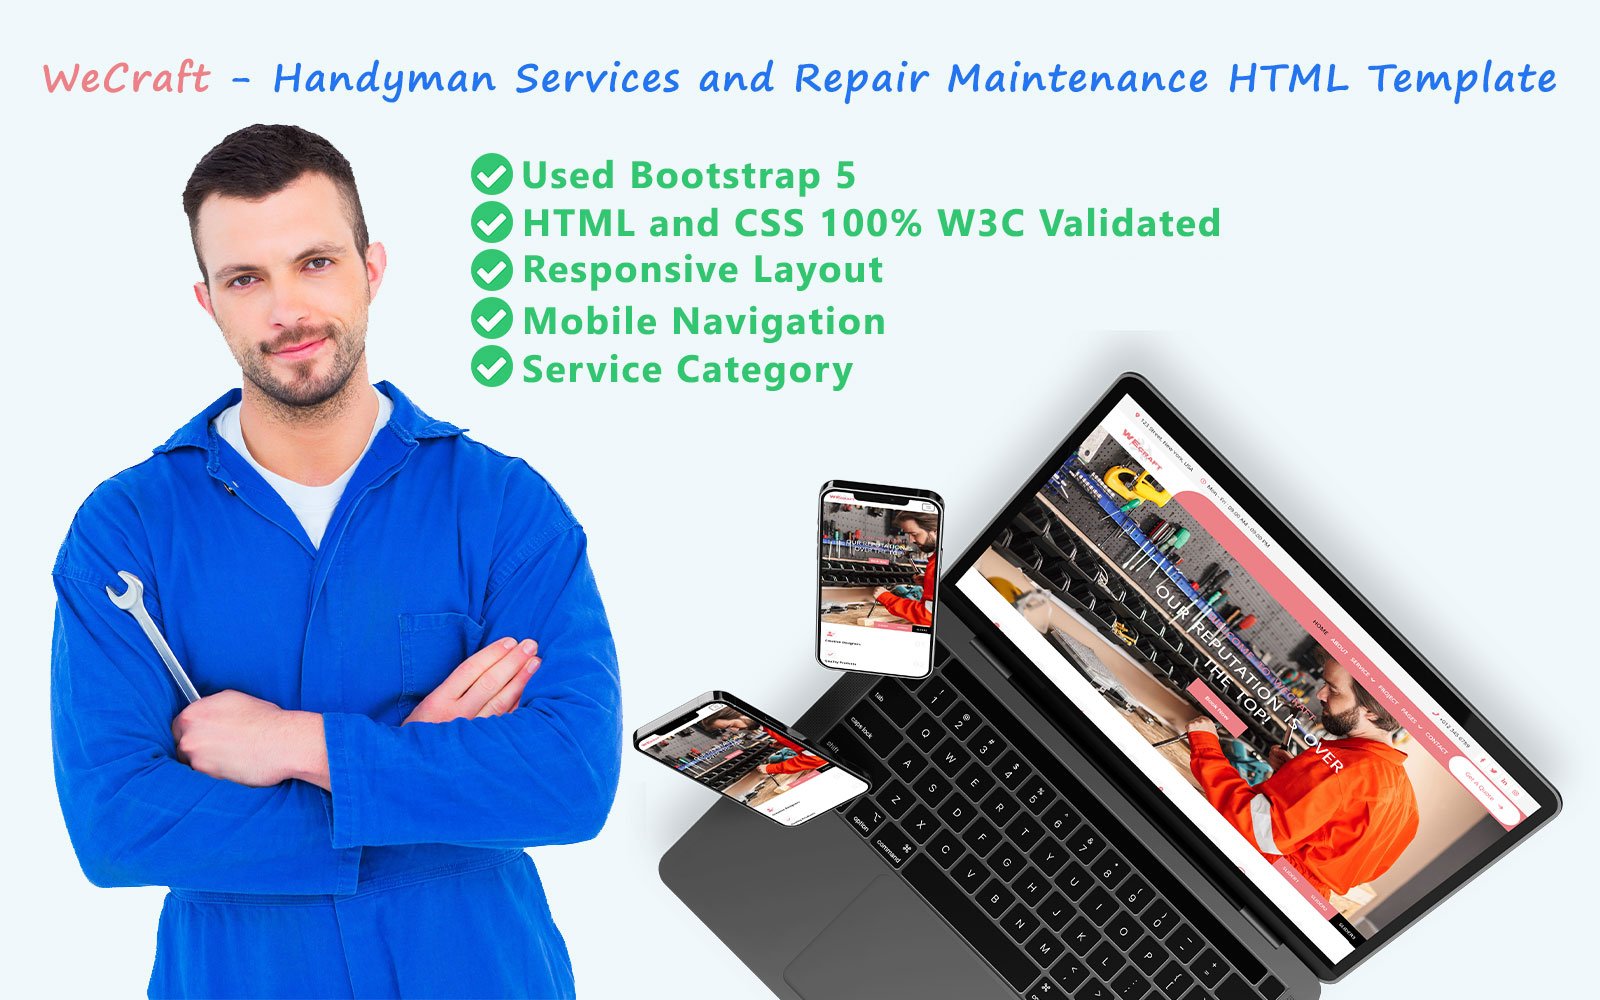 WeCraft - Handyman Services and Repair Maintenance HTML Template